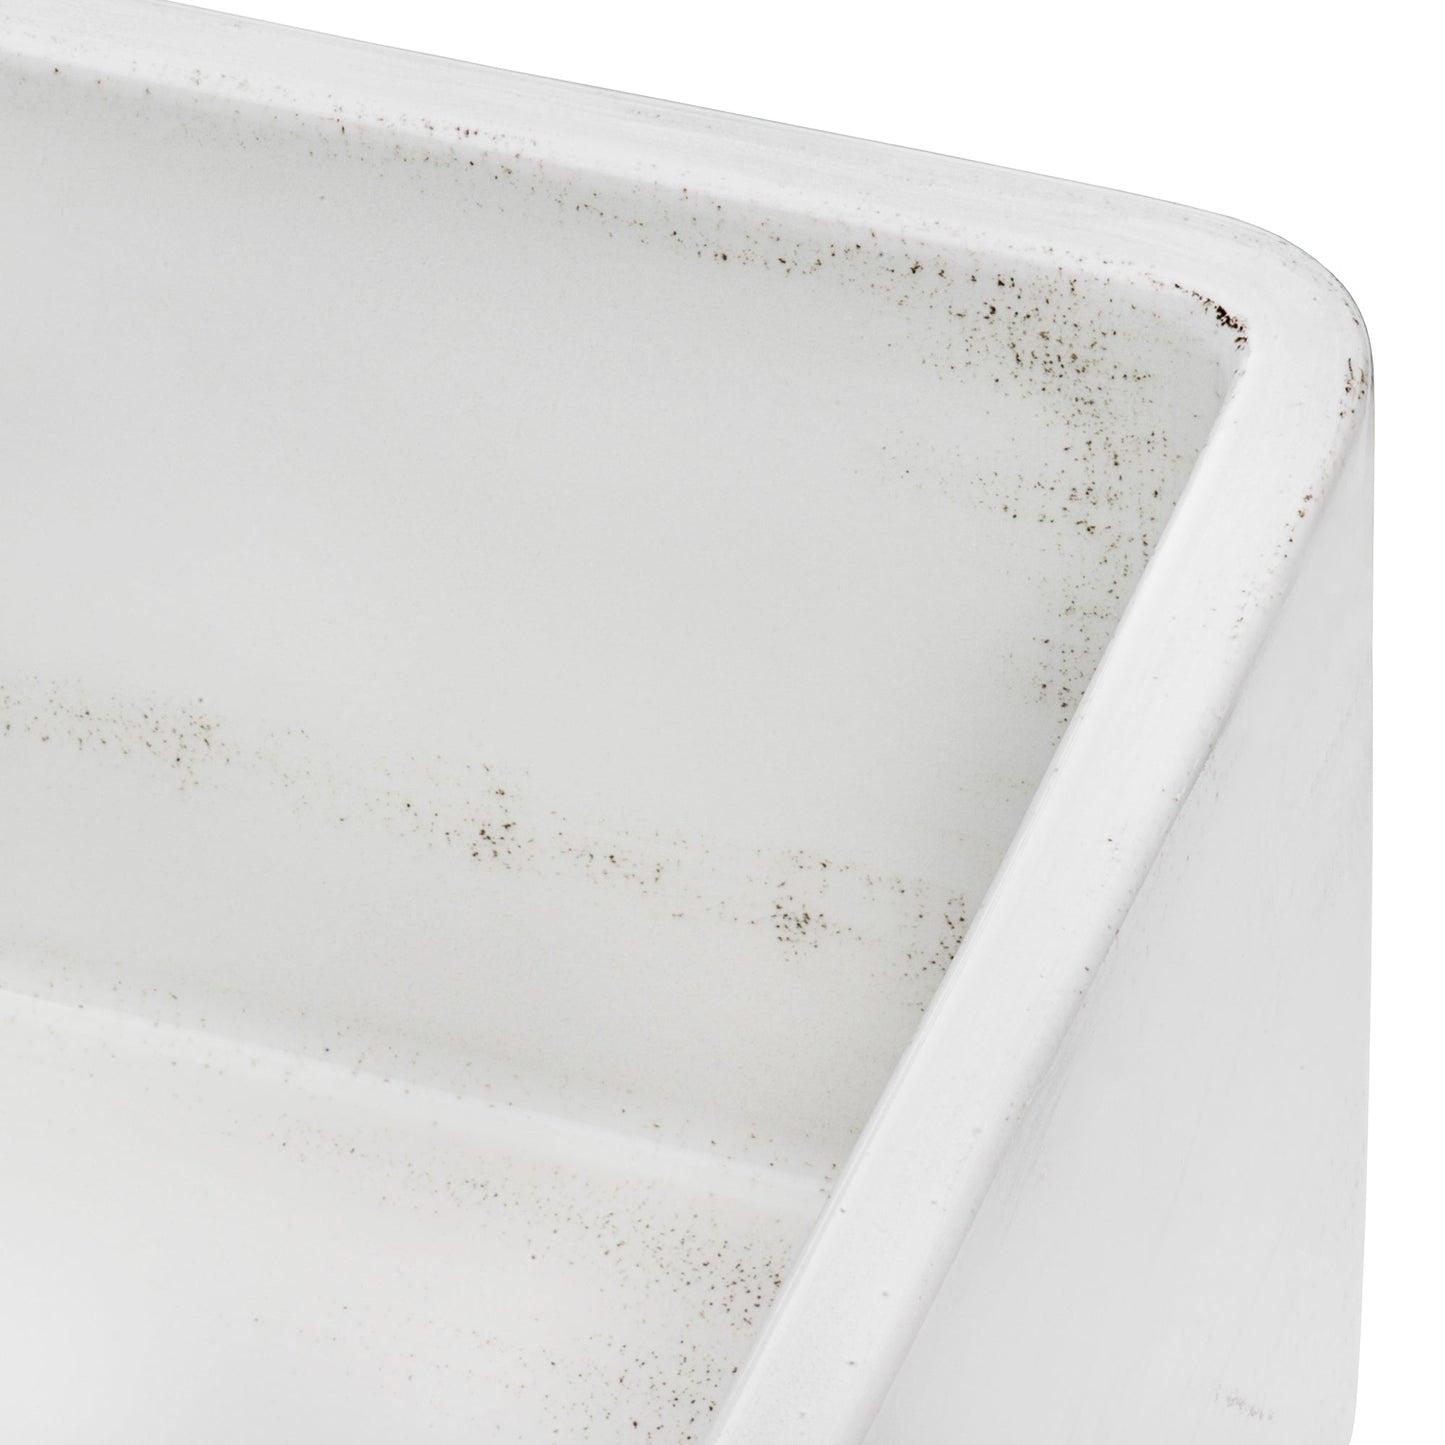 Ruvati Fiamma 33" x 20" Distressed White Single Bowl Fireclay Reversible Farmhouse Apron-Front Kitchen Sink